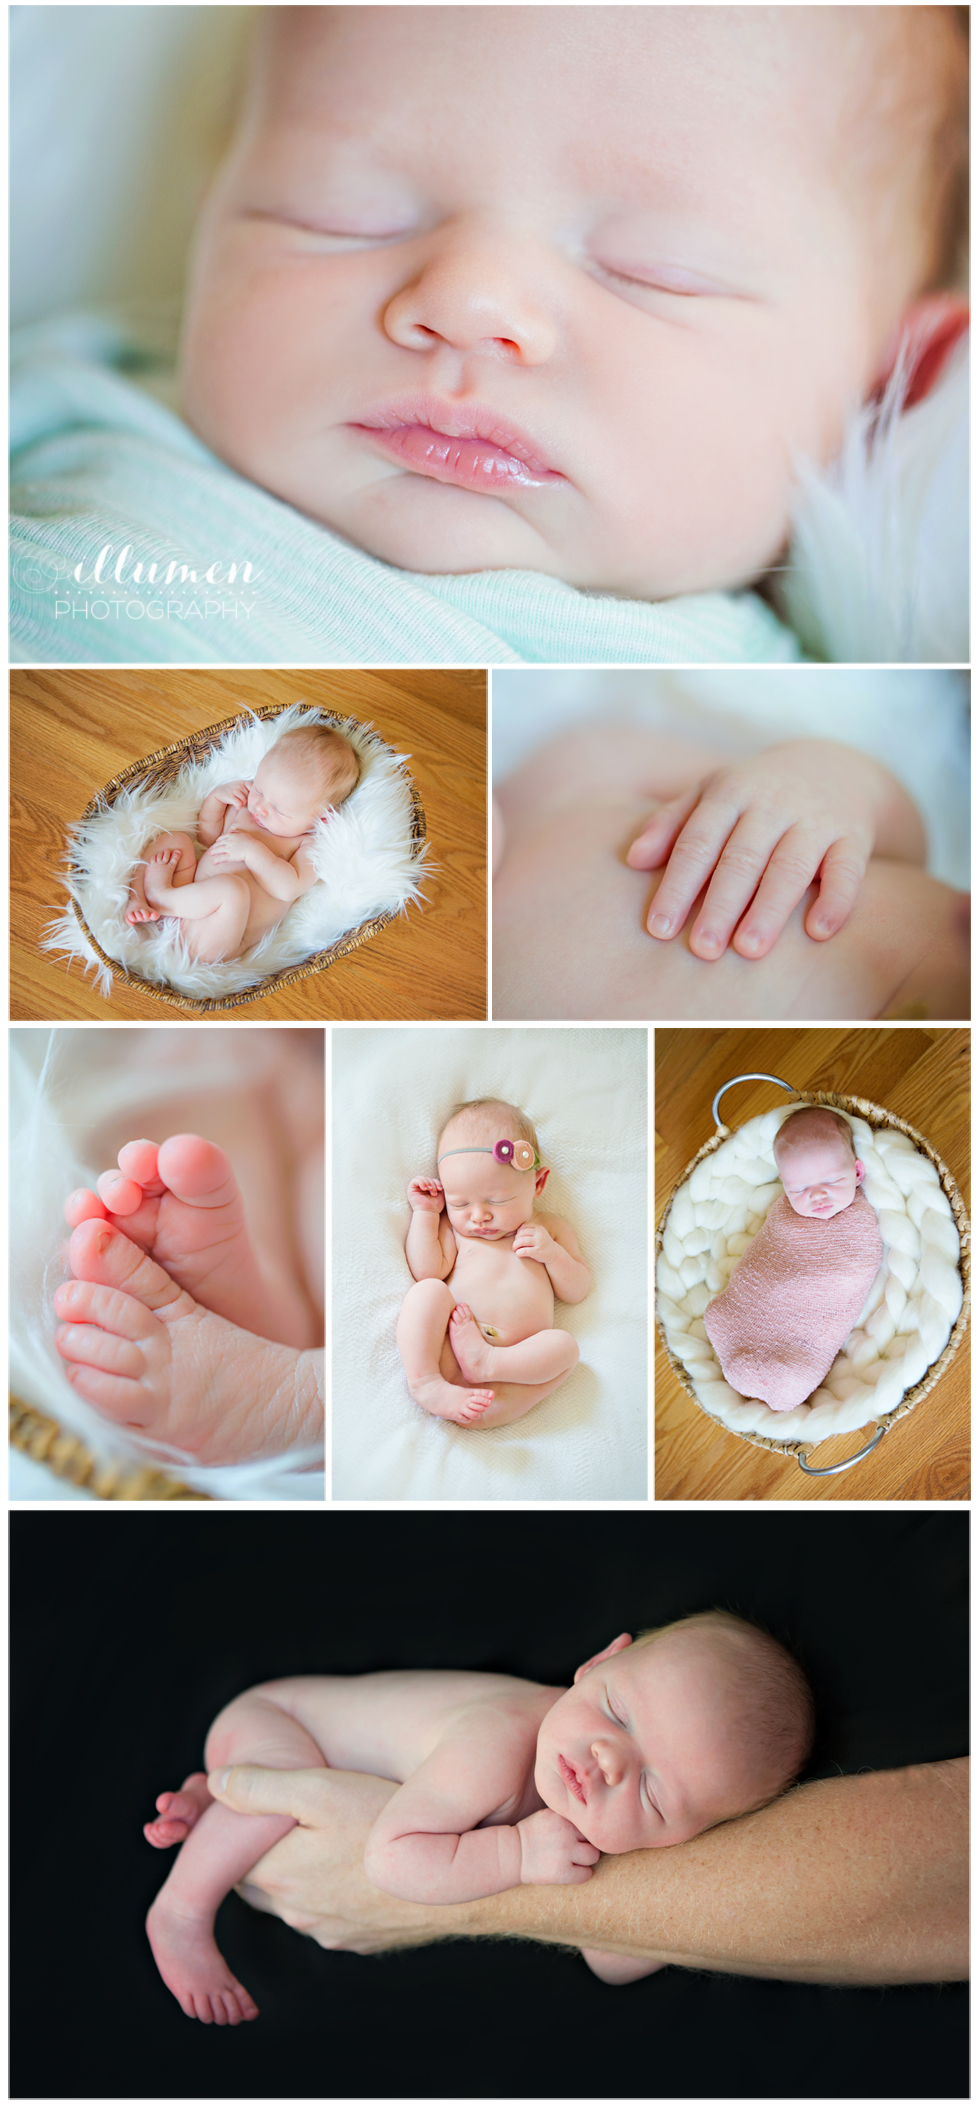 www.illumenphotography.com, St. Louis Newborn Photography